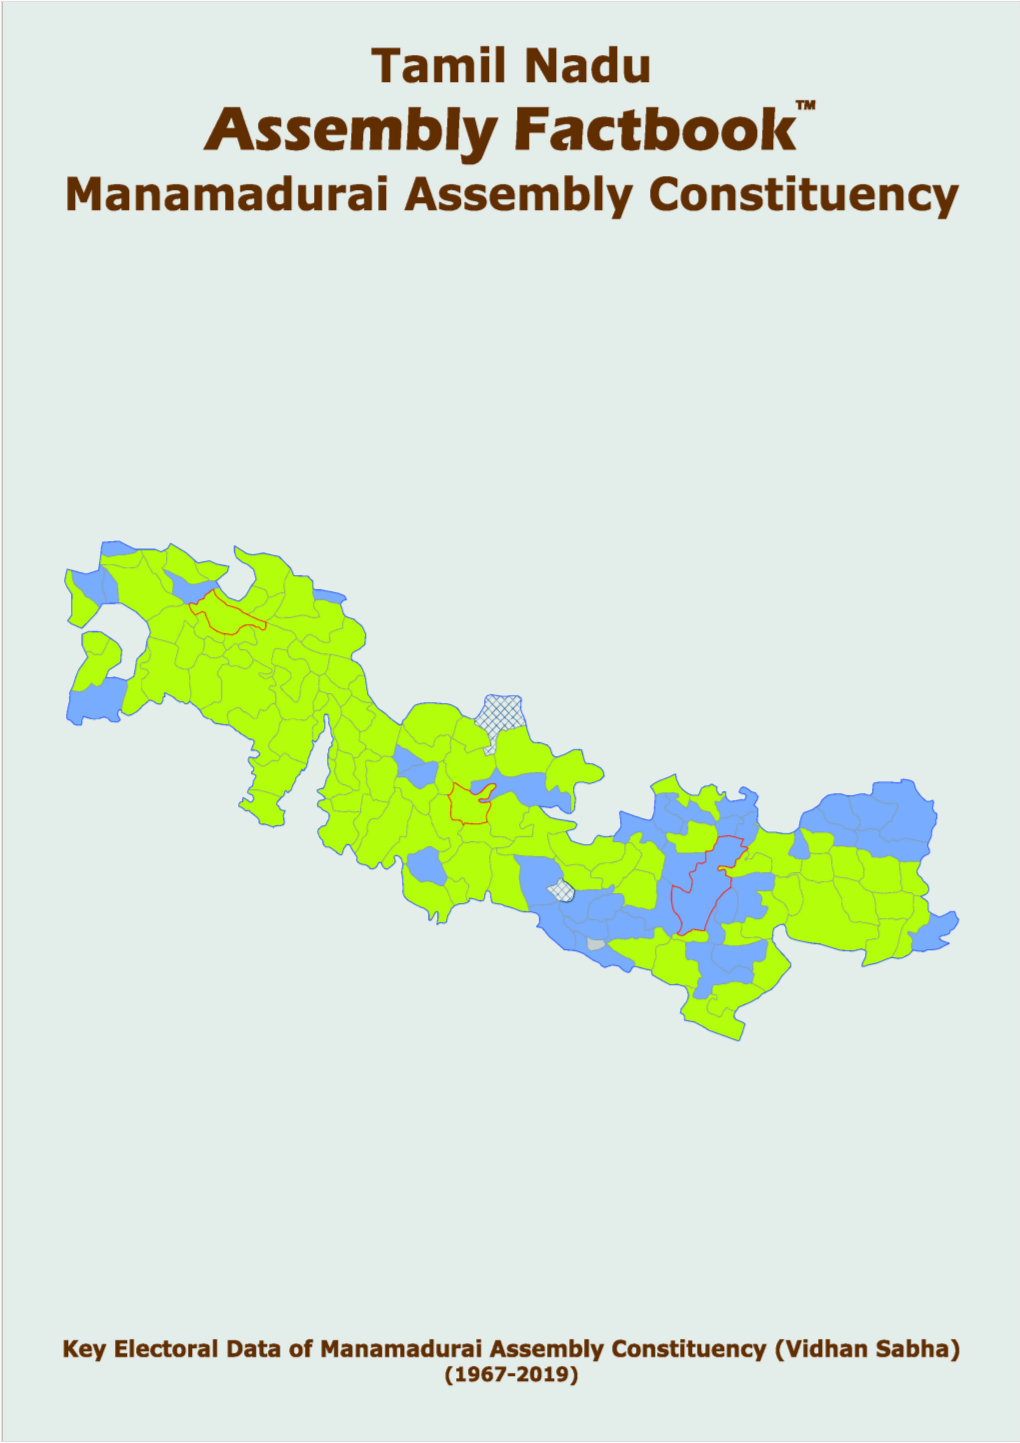 Manamadurai Assembly Tamil Nadu Factbook